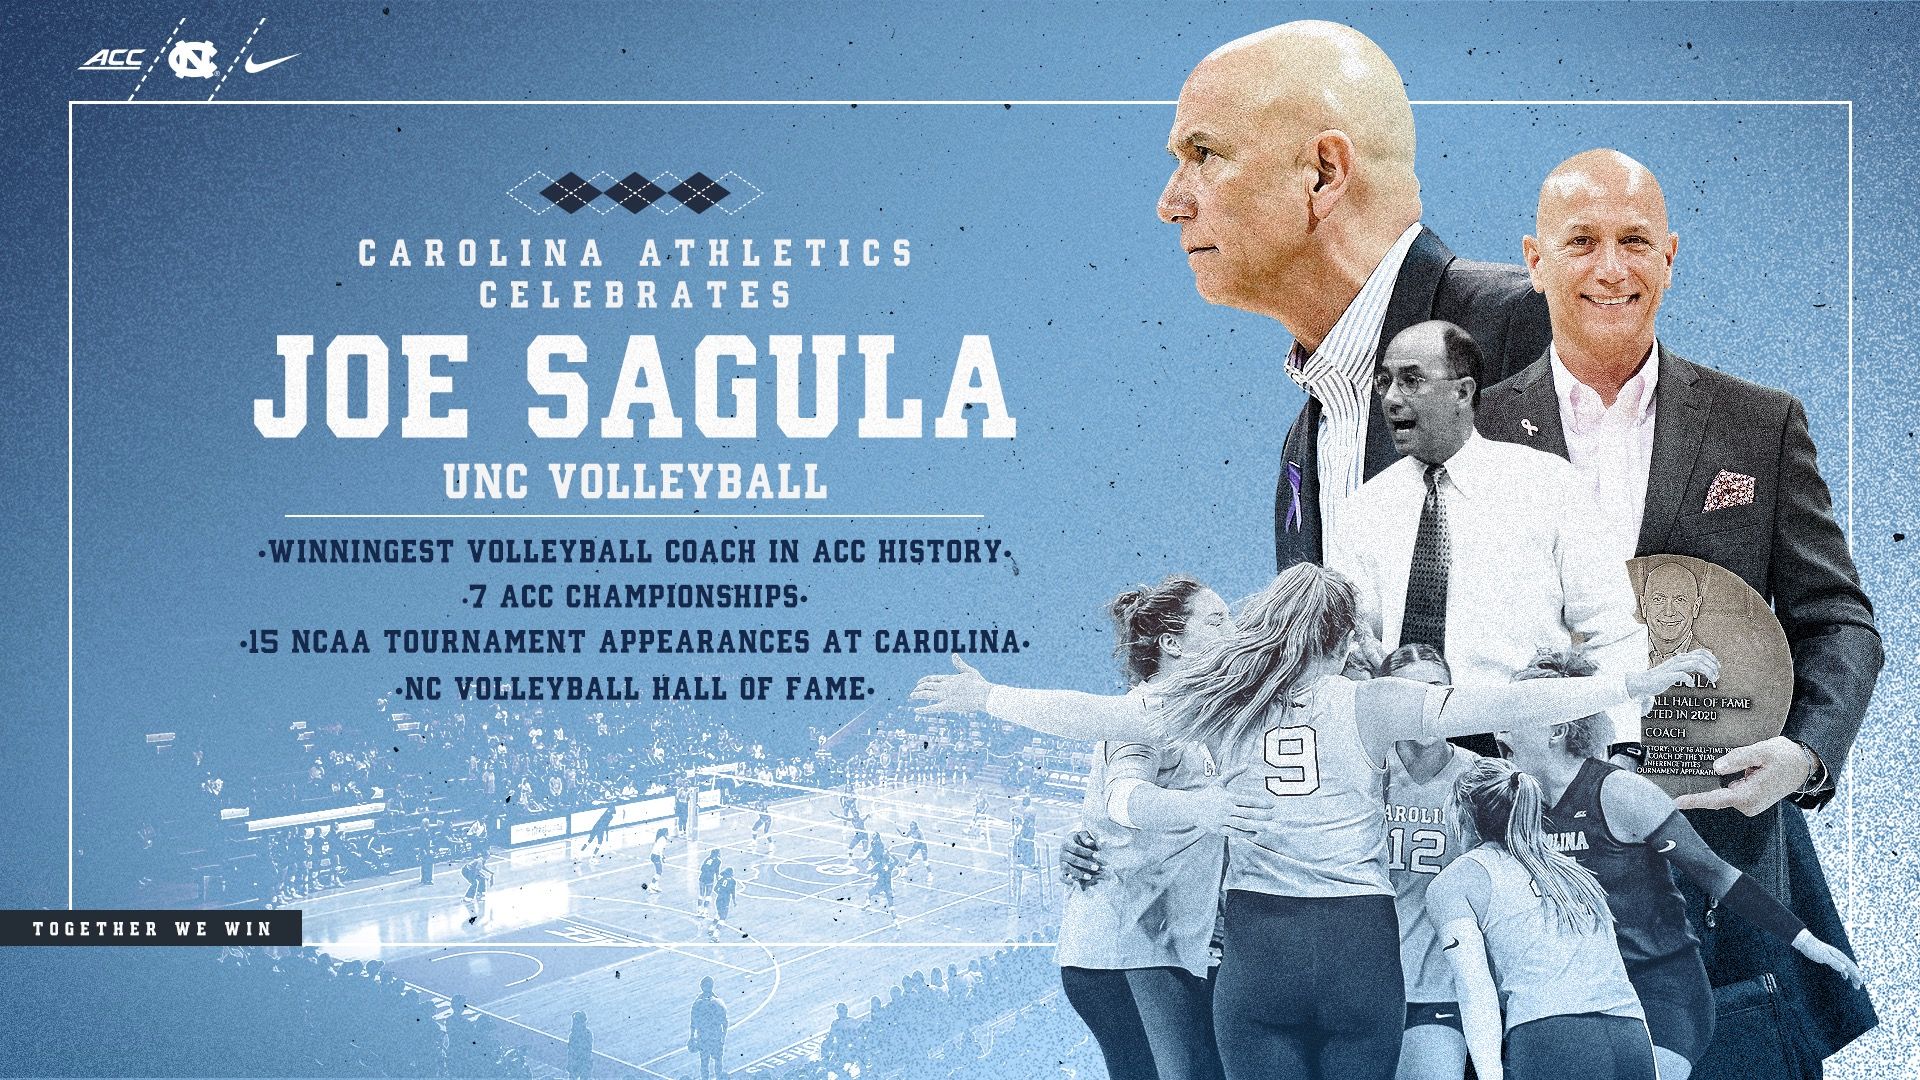 Carolina athletics celebrates Joe Sagula of UNC volleyball.